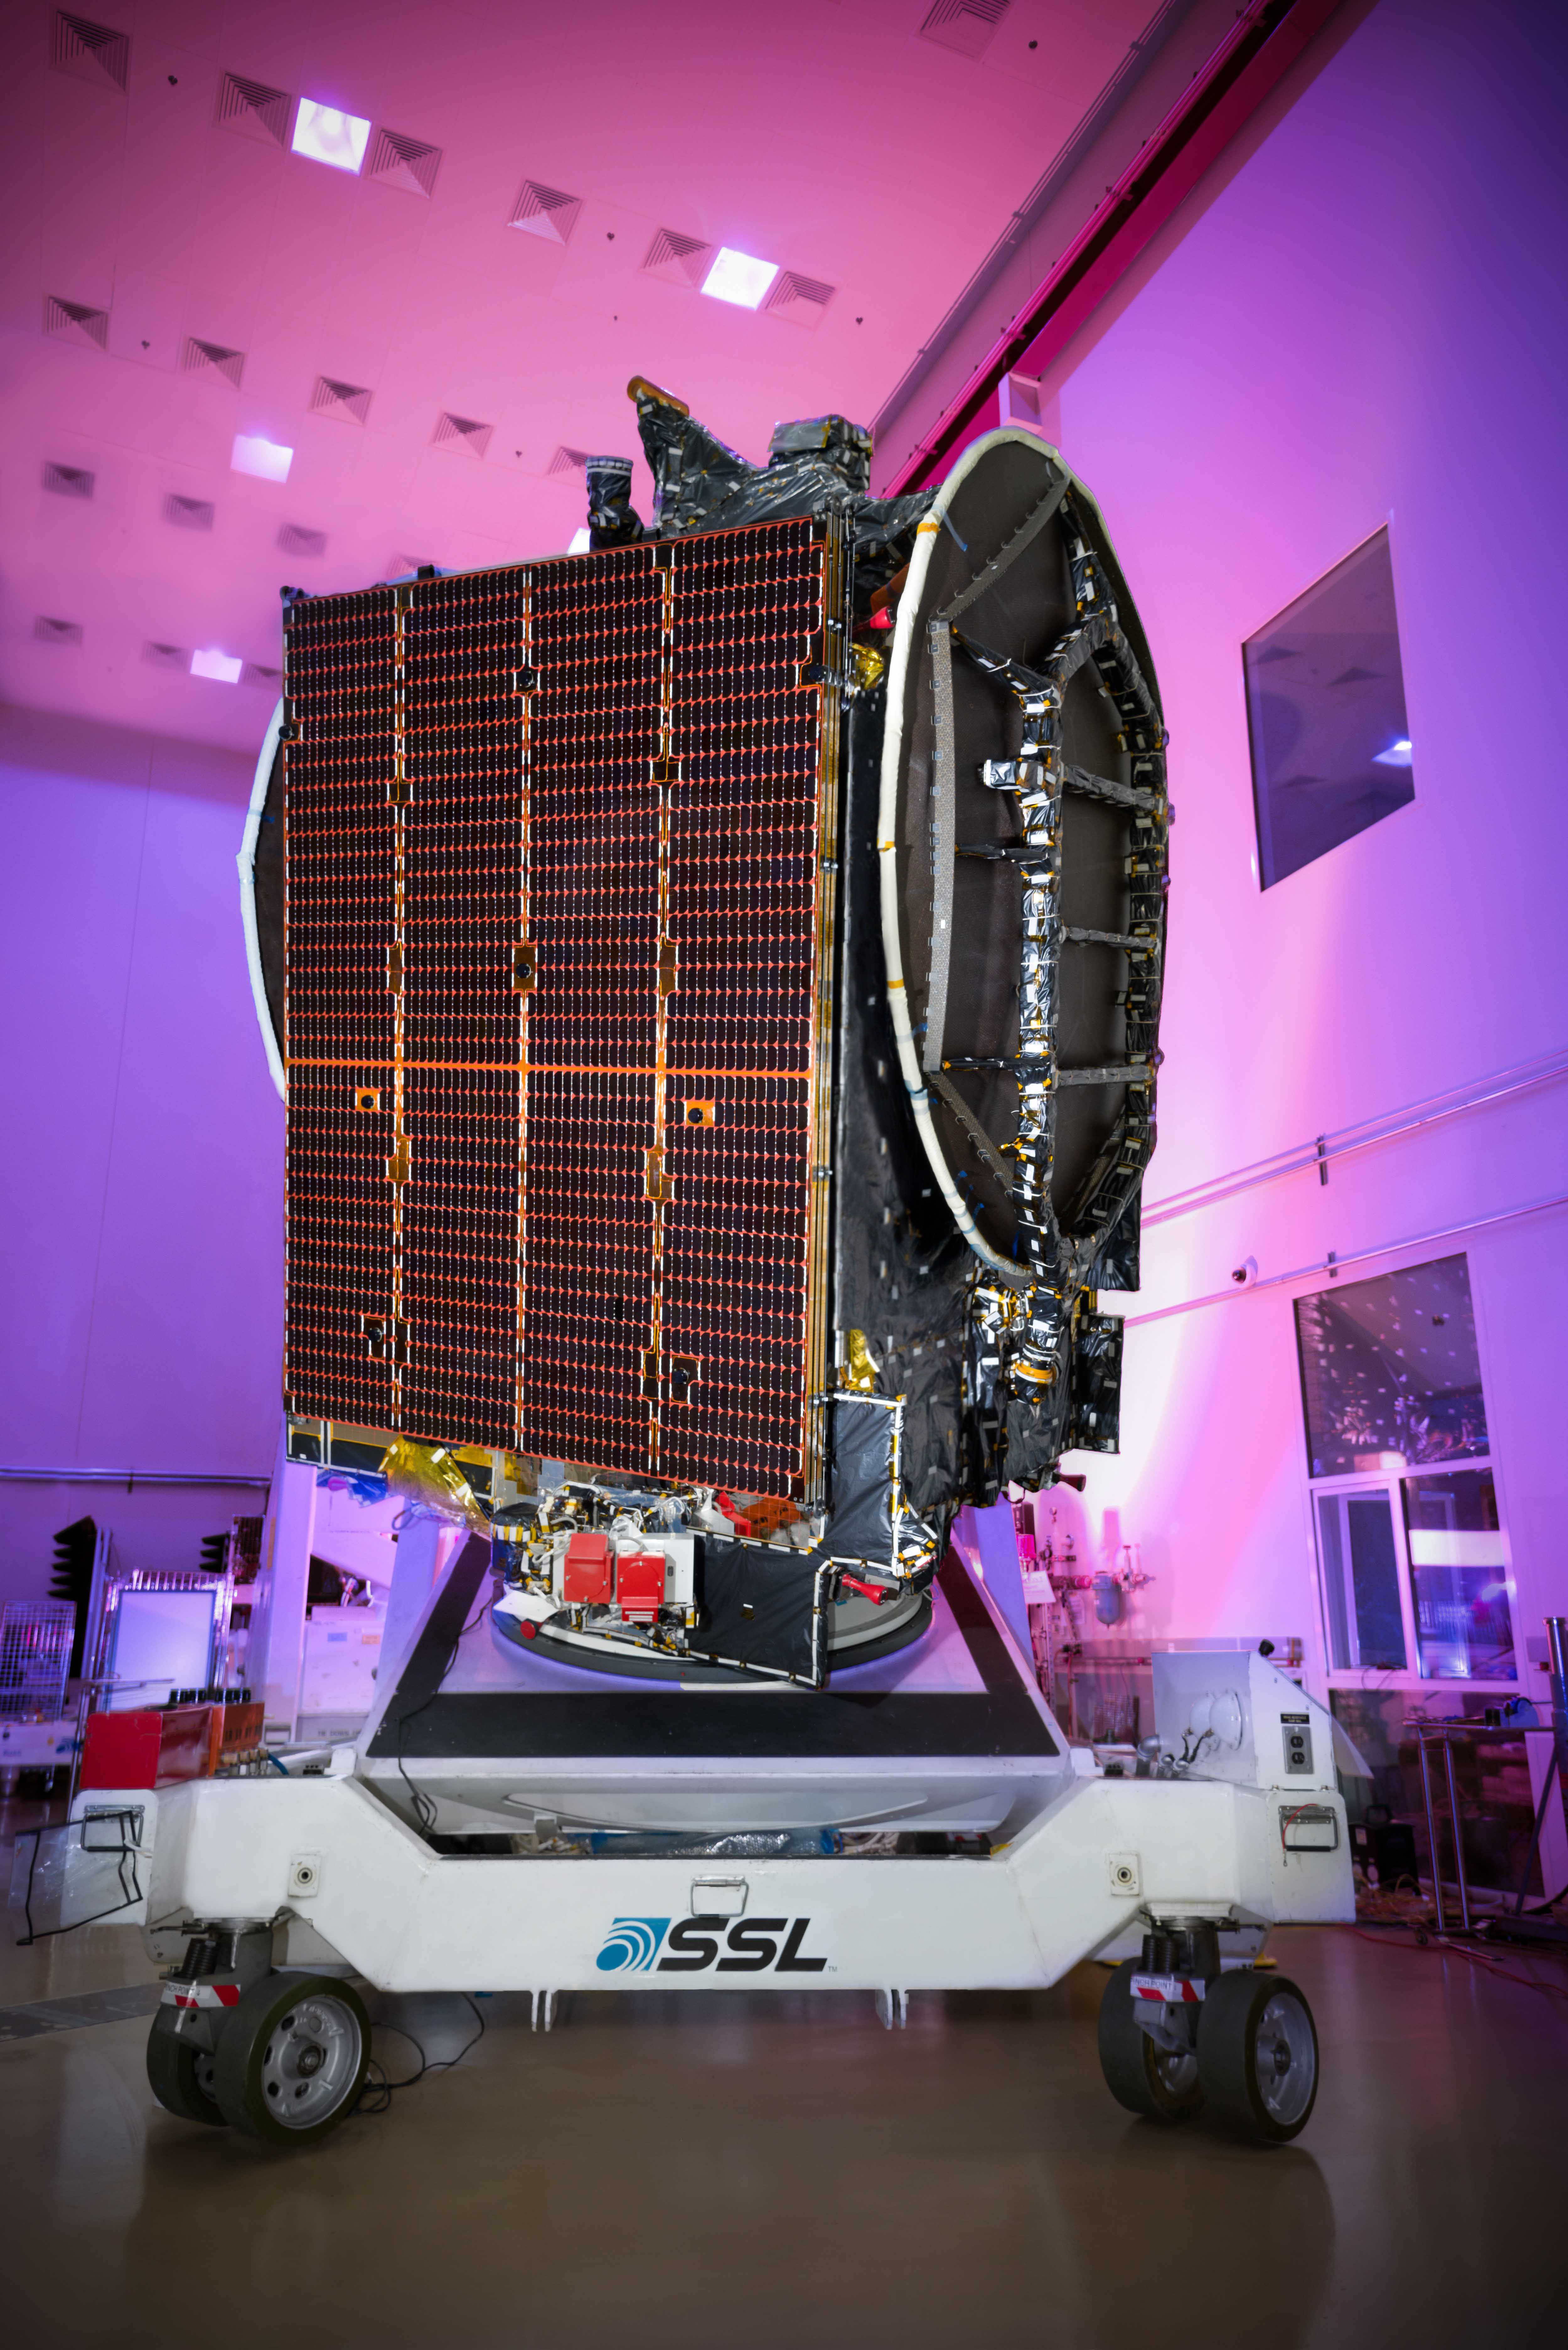 SSL-built JCSAT-15 satellite